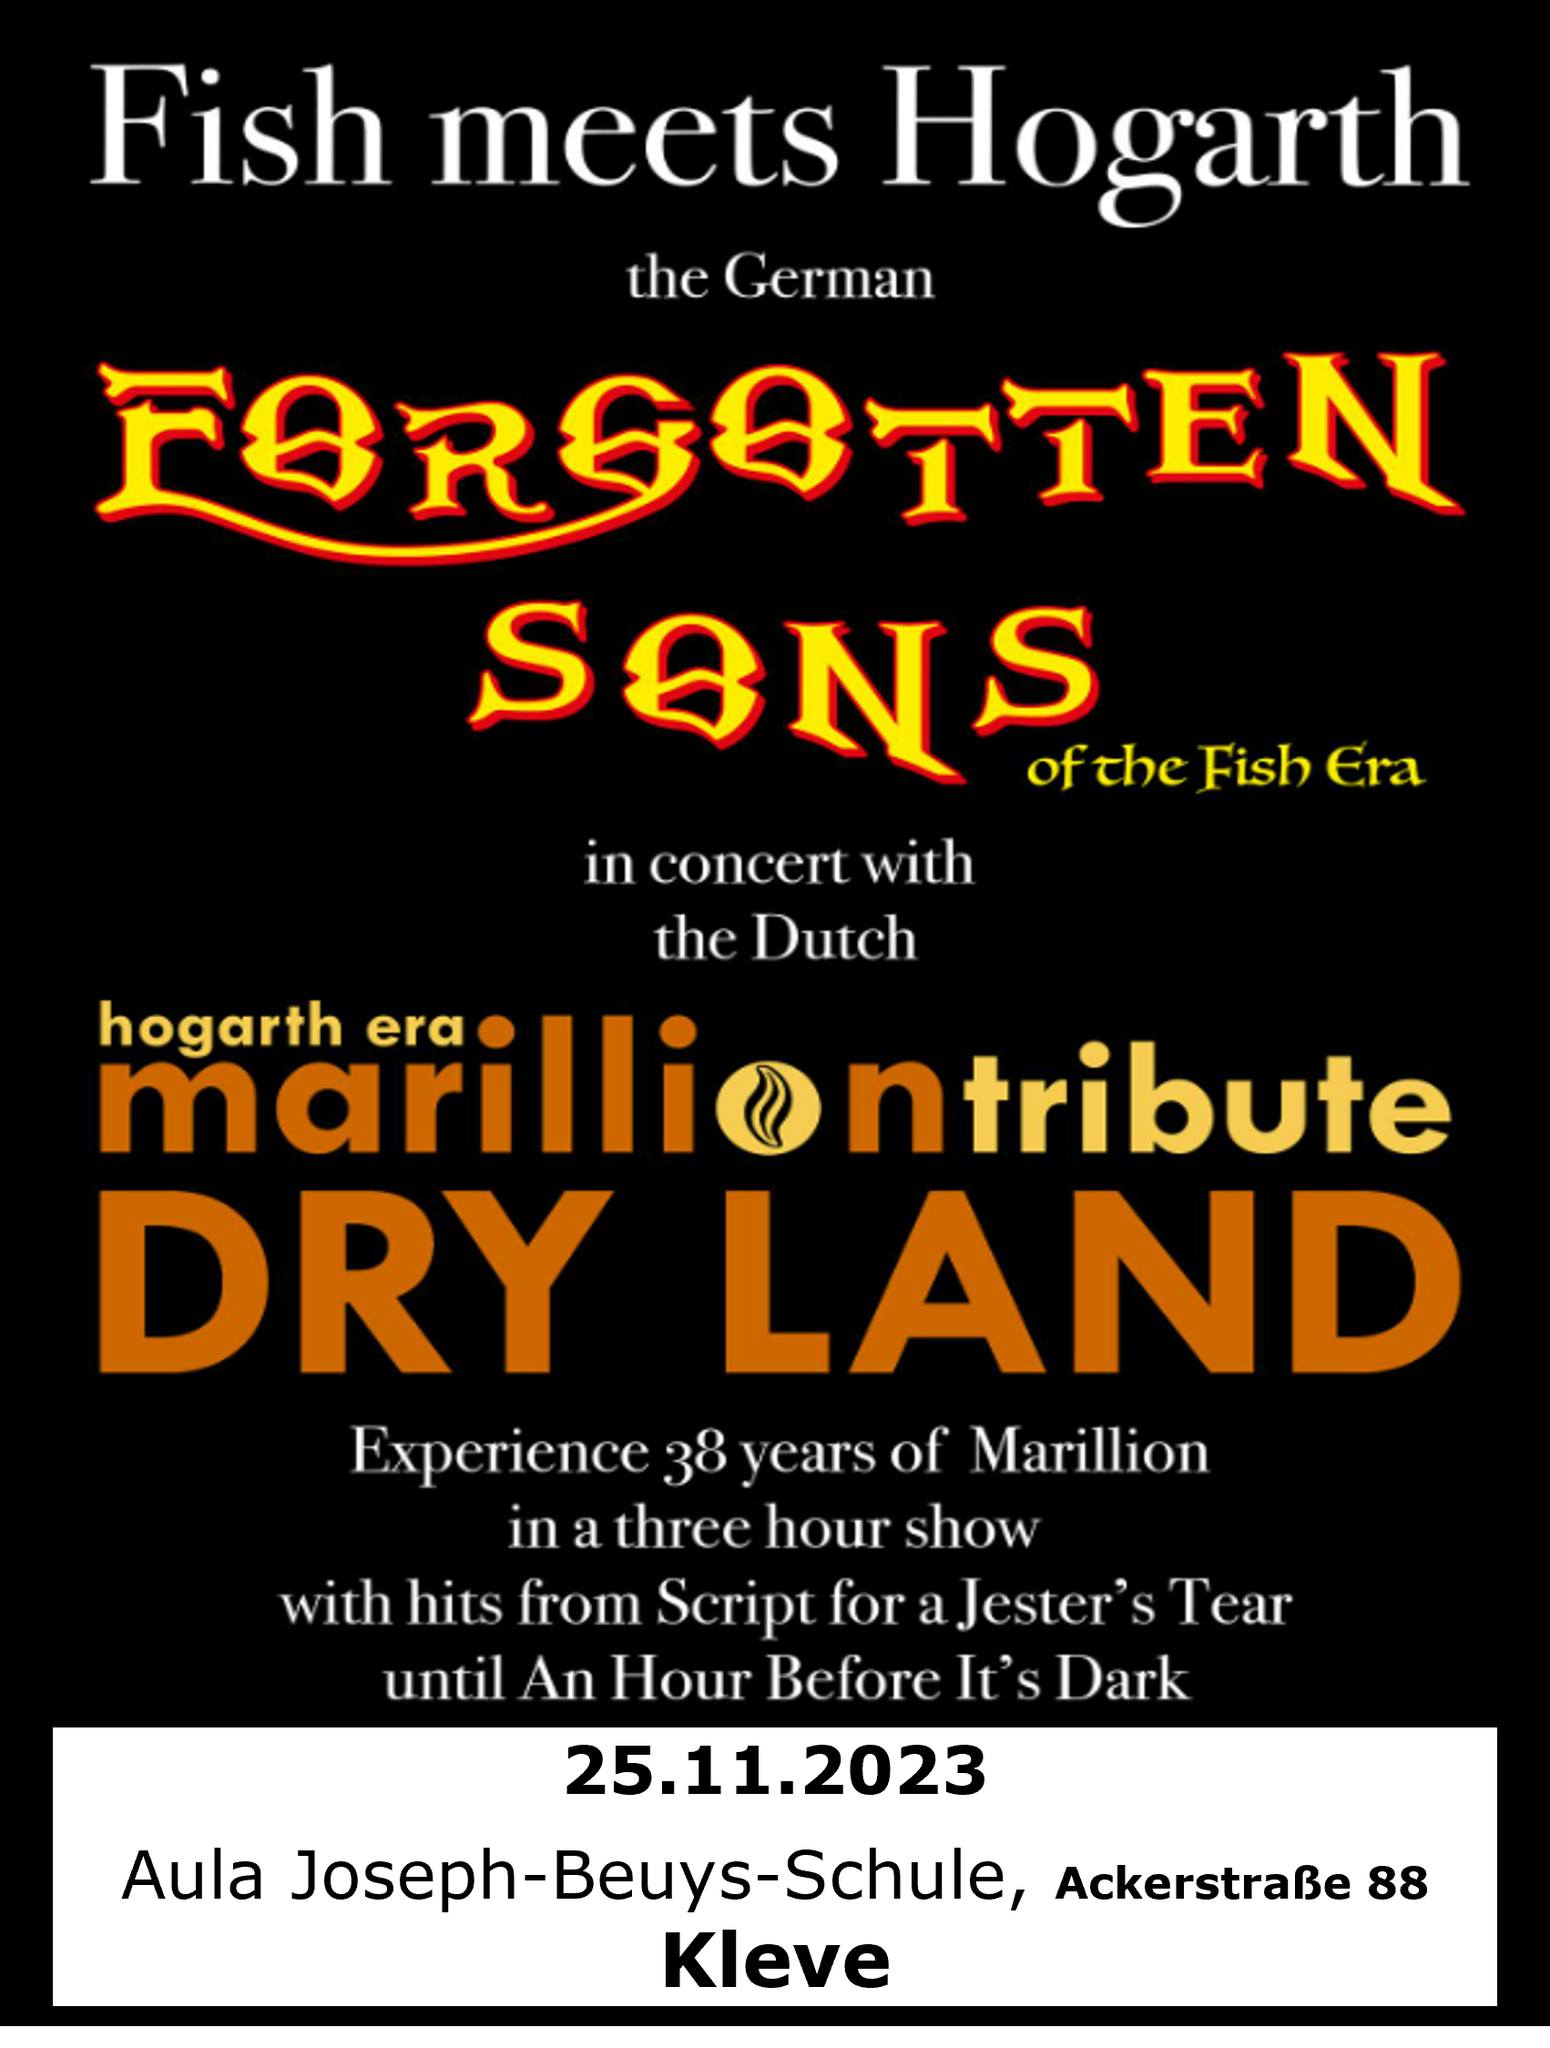 Marillion tribute Dry Land Fish meets Hogarth 